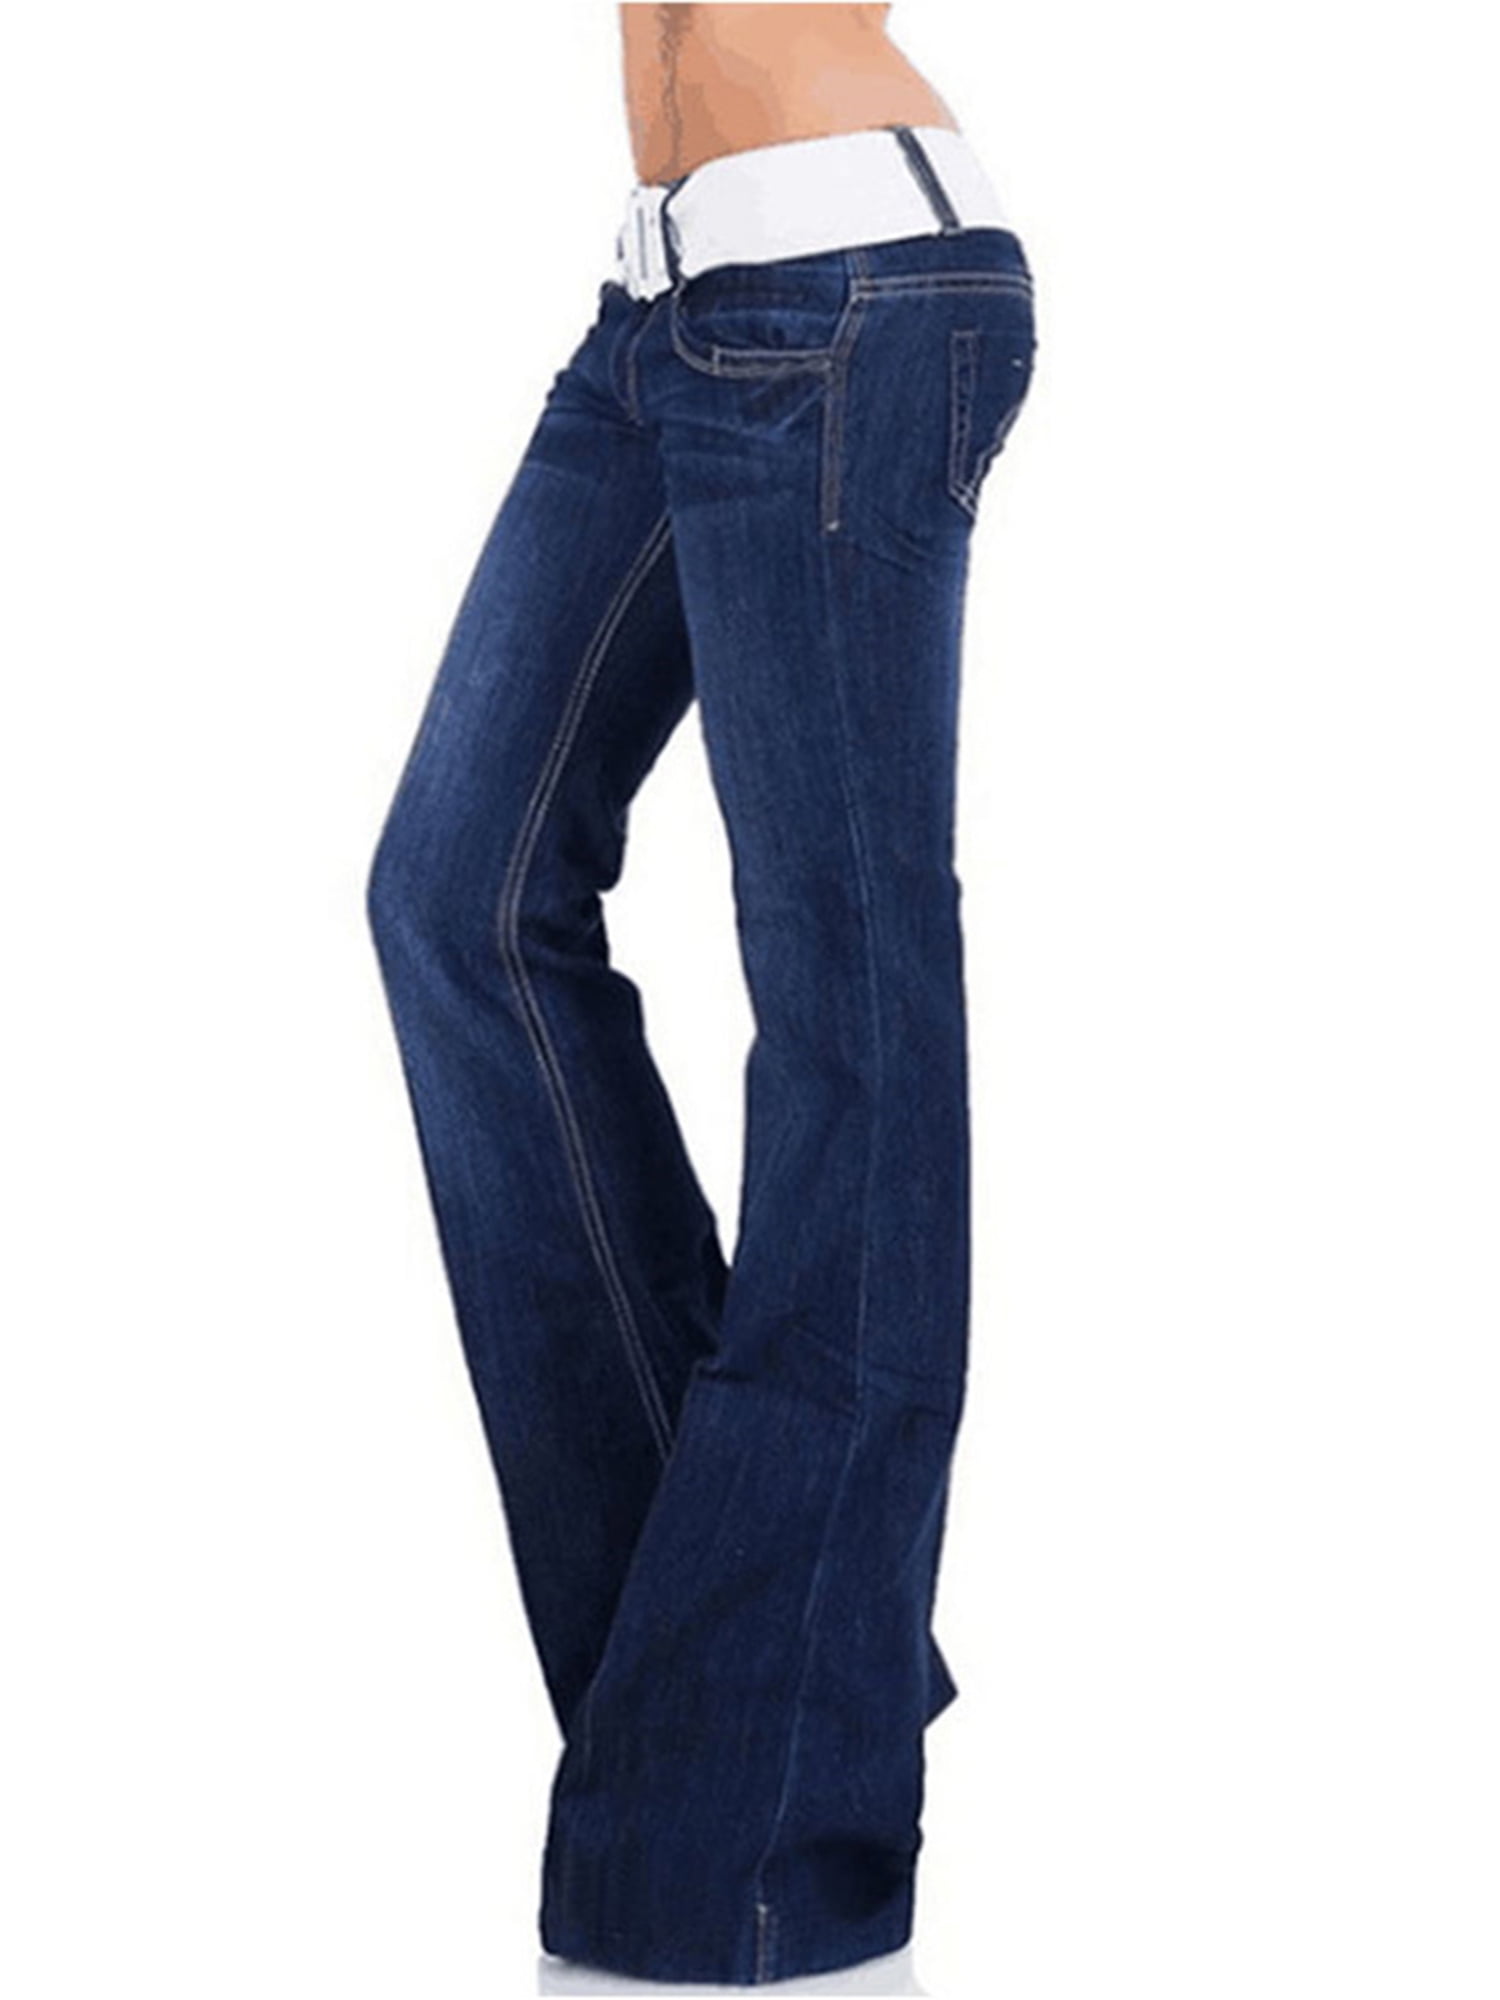 LAPA Women Classic Low Rise Bootcut Jeans - Walmart.com